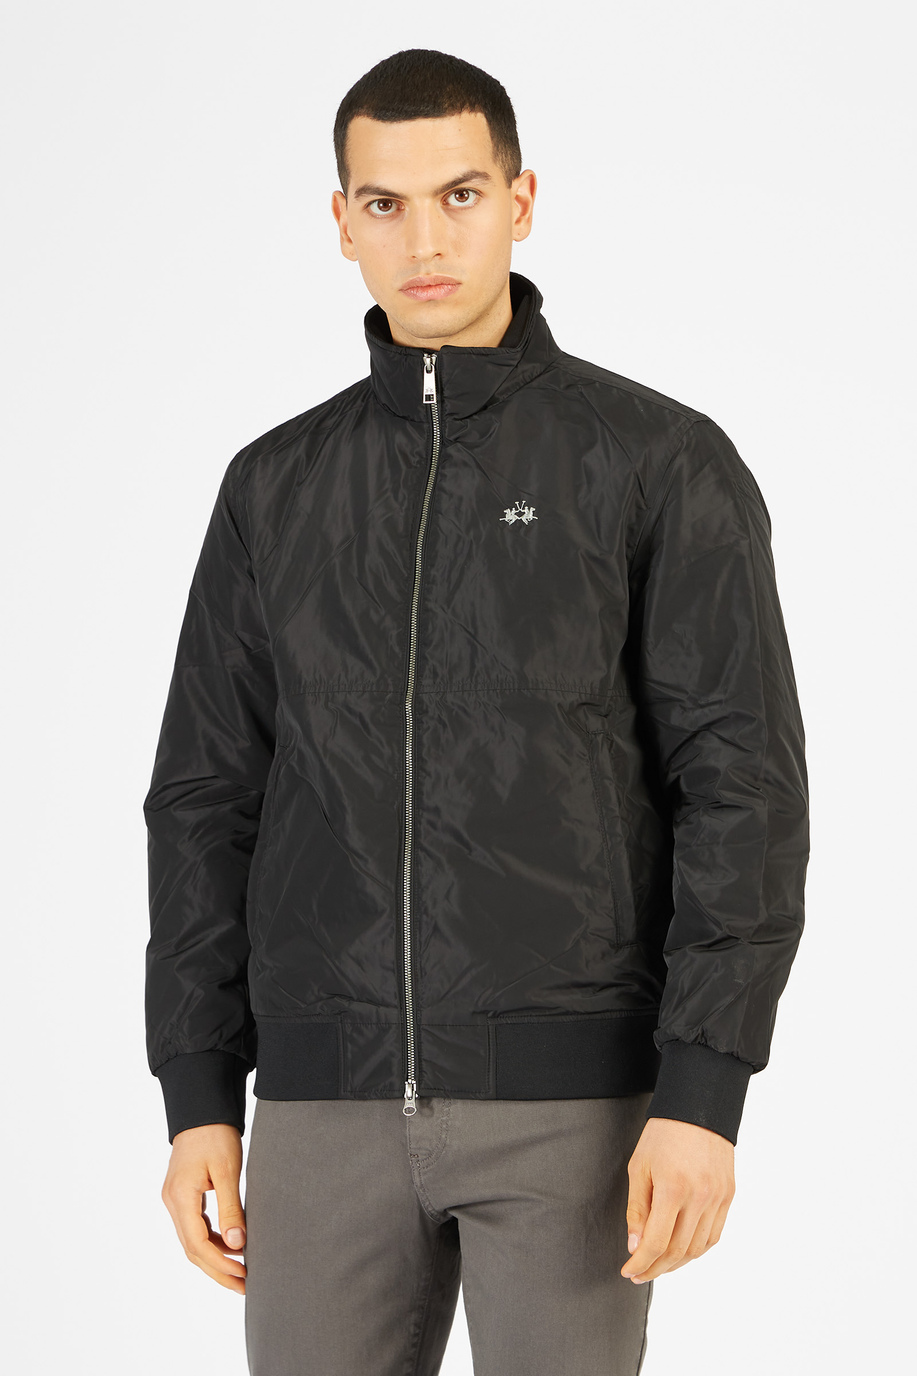 Men’s jacket in nylon regular fit model - Men | La Martina - Official Online Shop